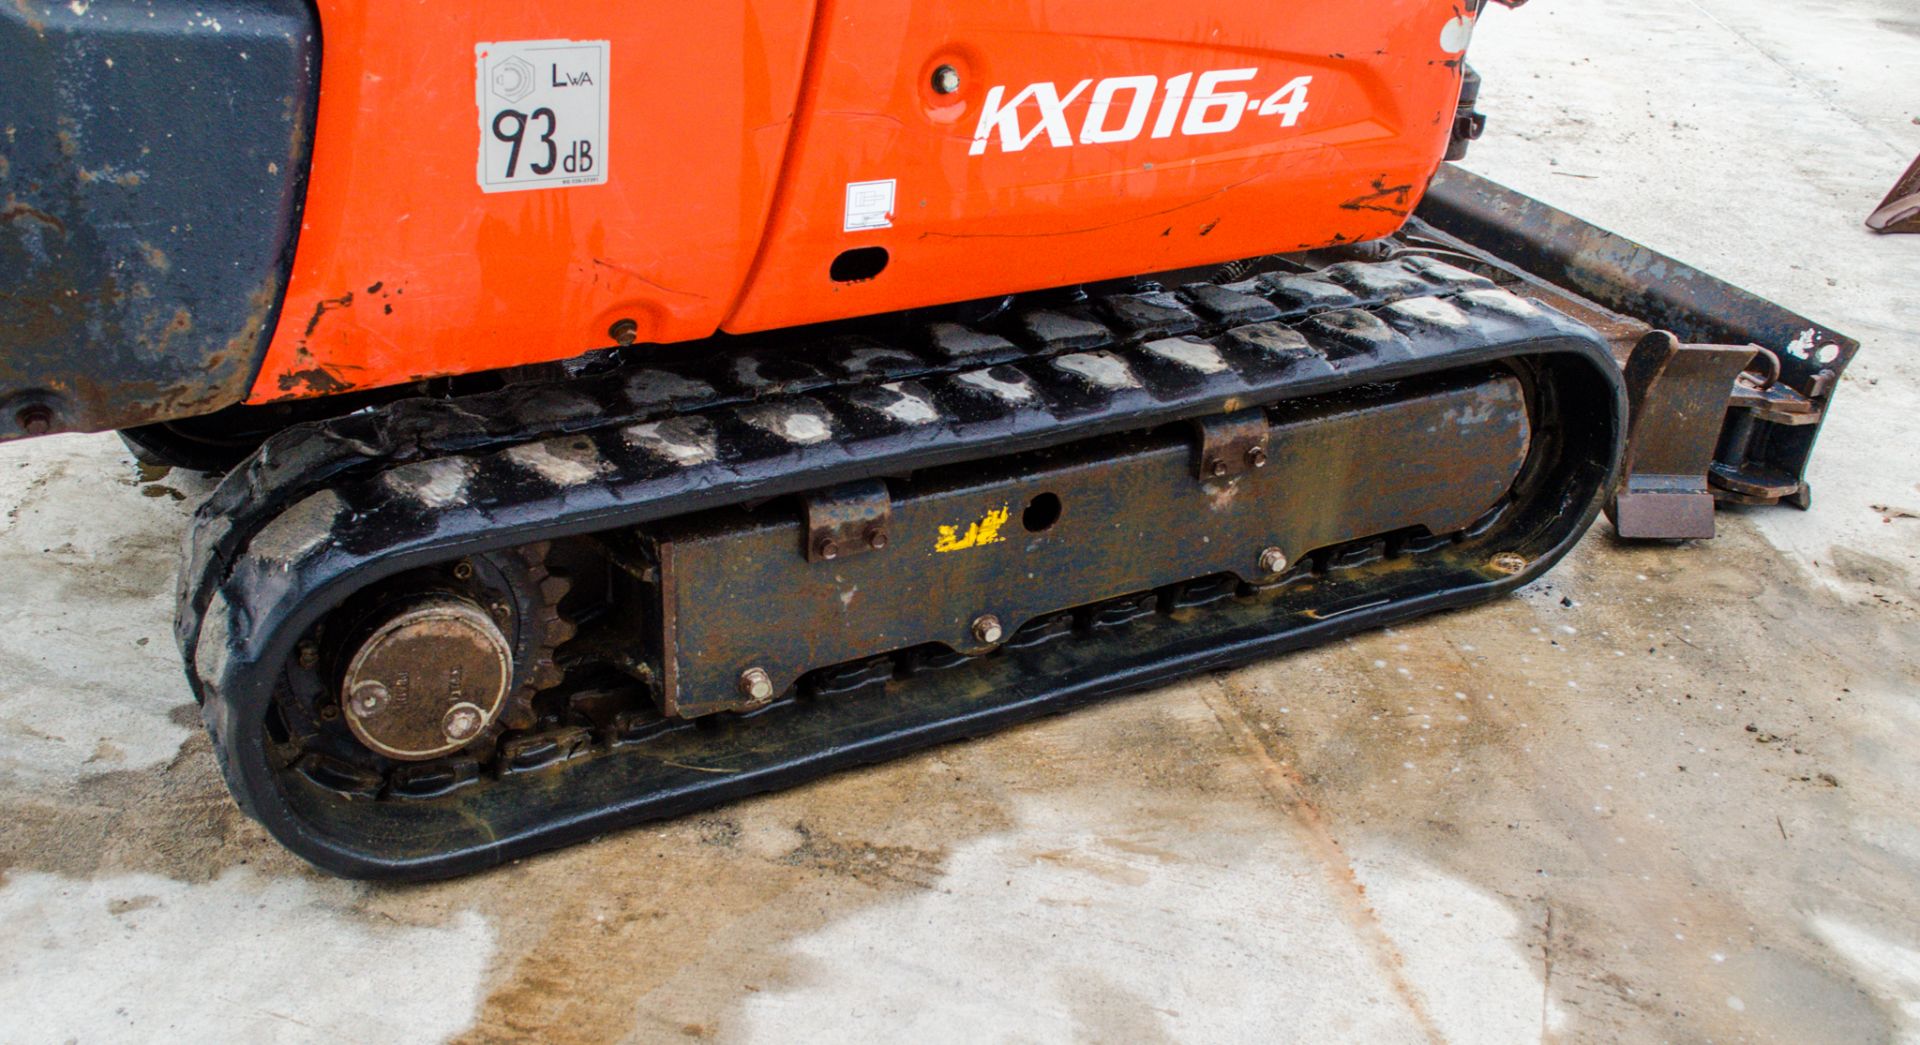 Kubota KX016-4 1.6 tonne rubber tracked mini excavator Year: 2014 S/N: 60967 Recorded Hours: 1819 - Image 10 of 21